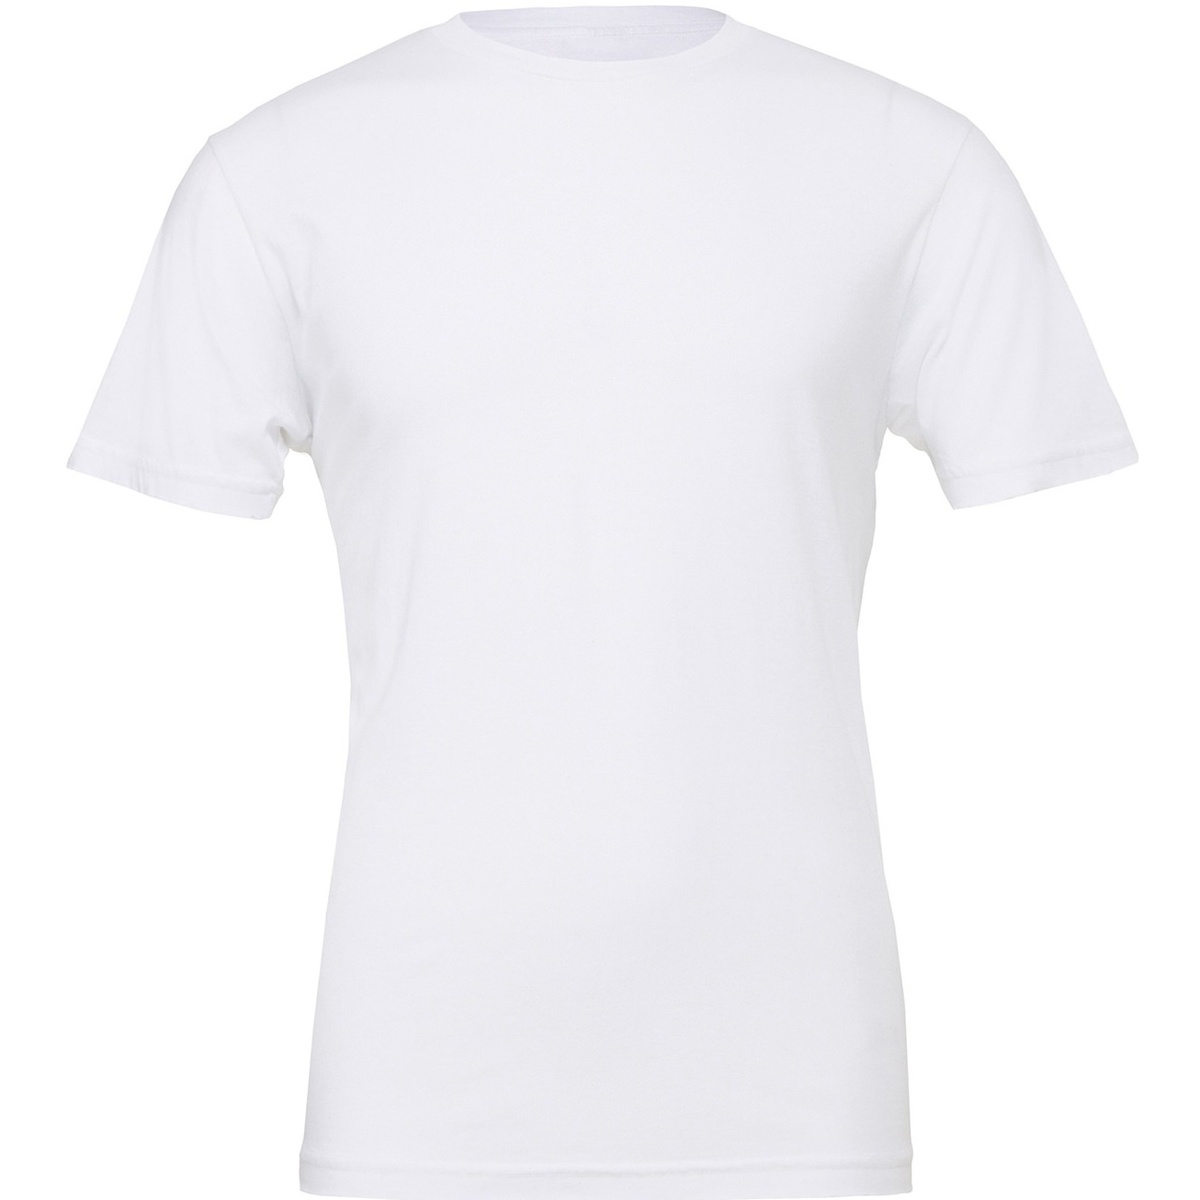 textil Camisetas manga larga Bella + Canvas CV001 Blanco